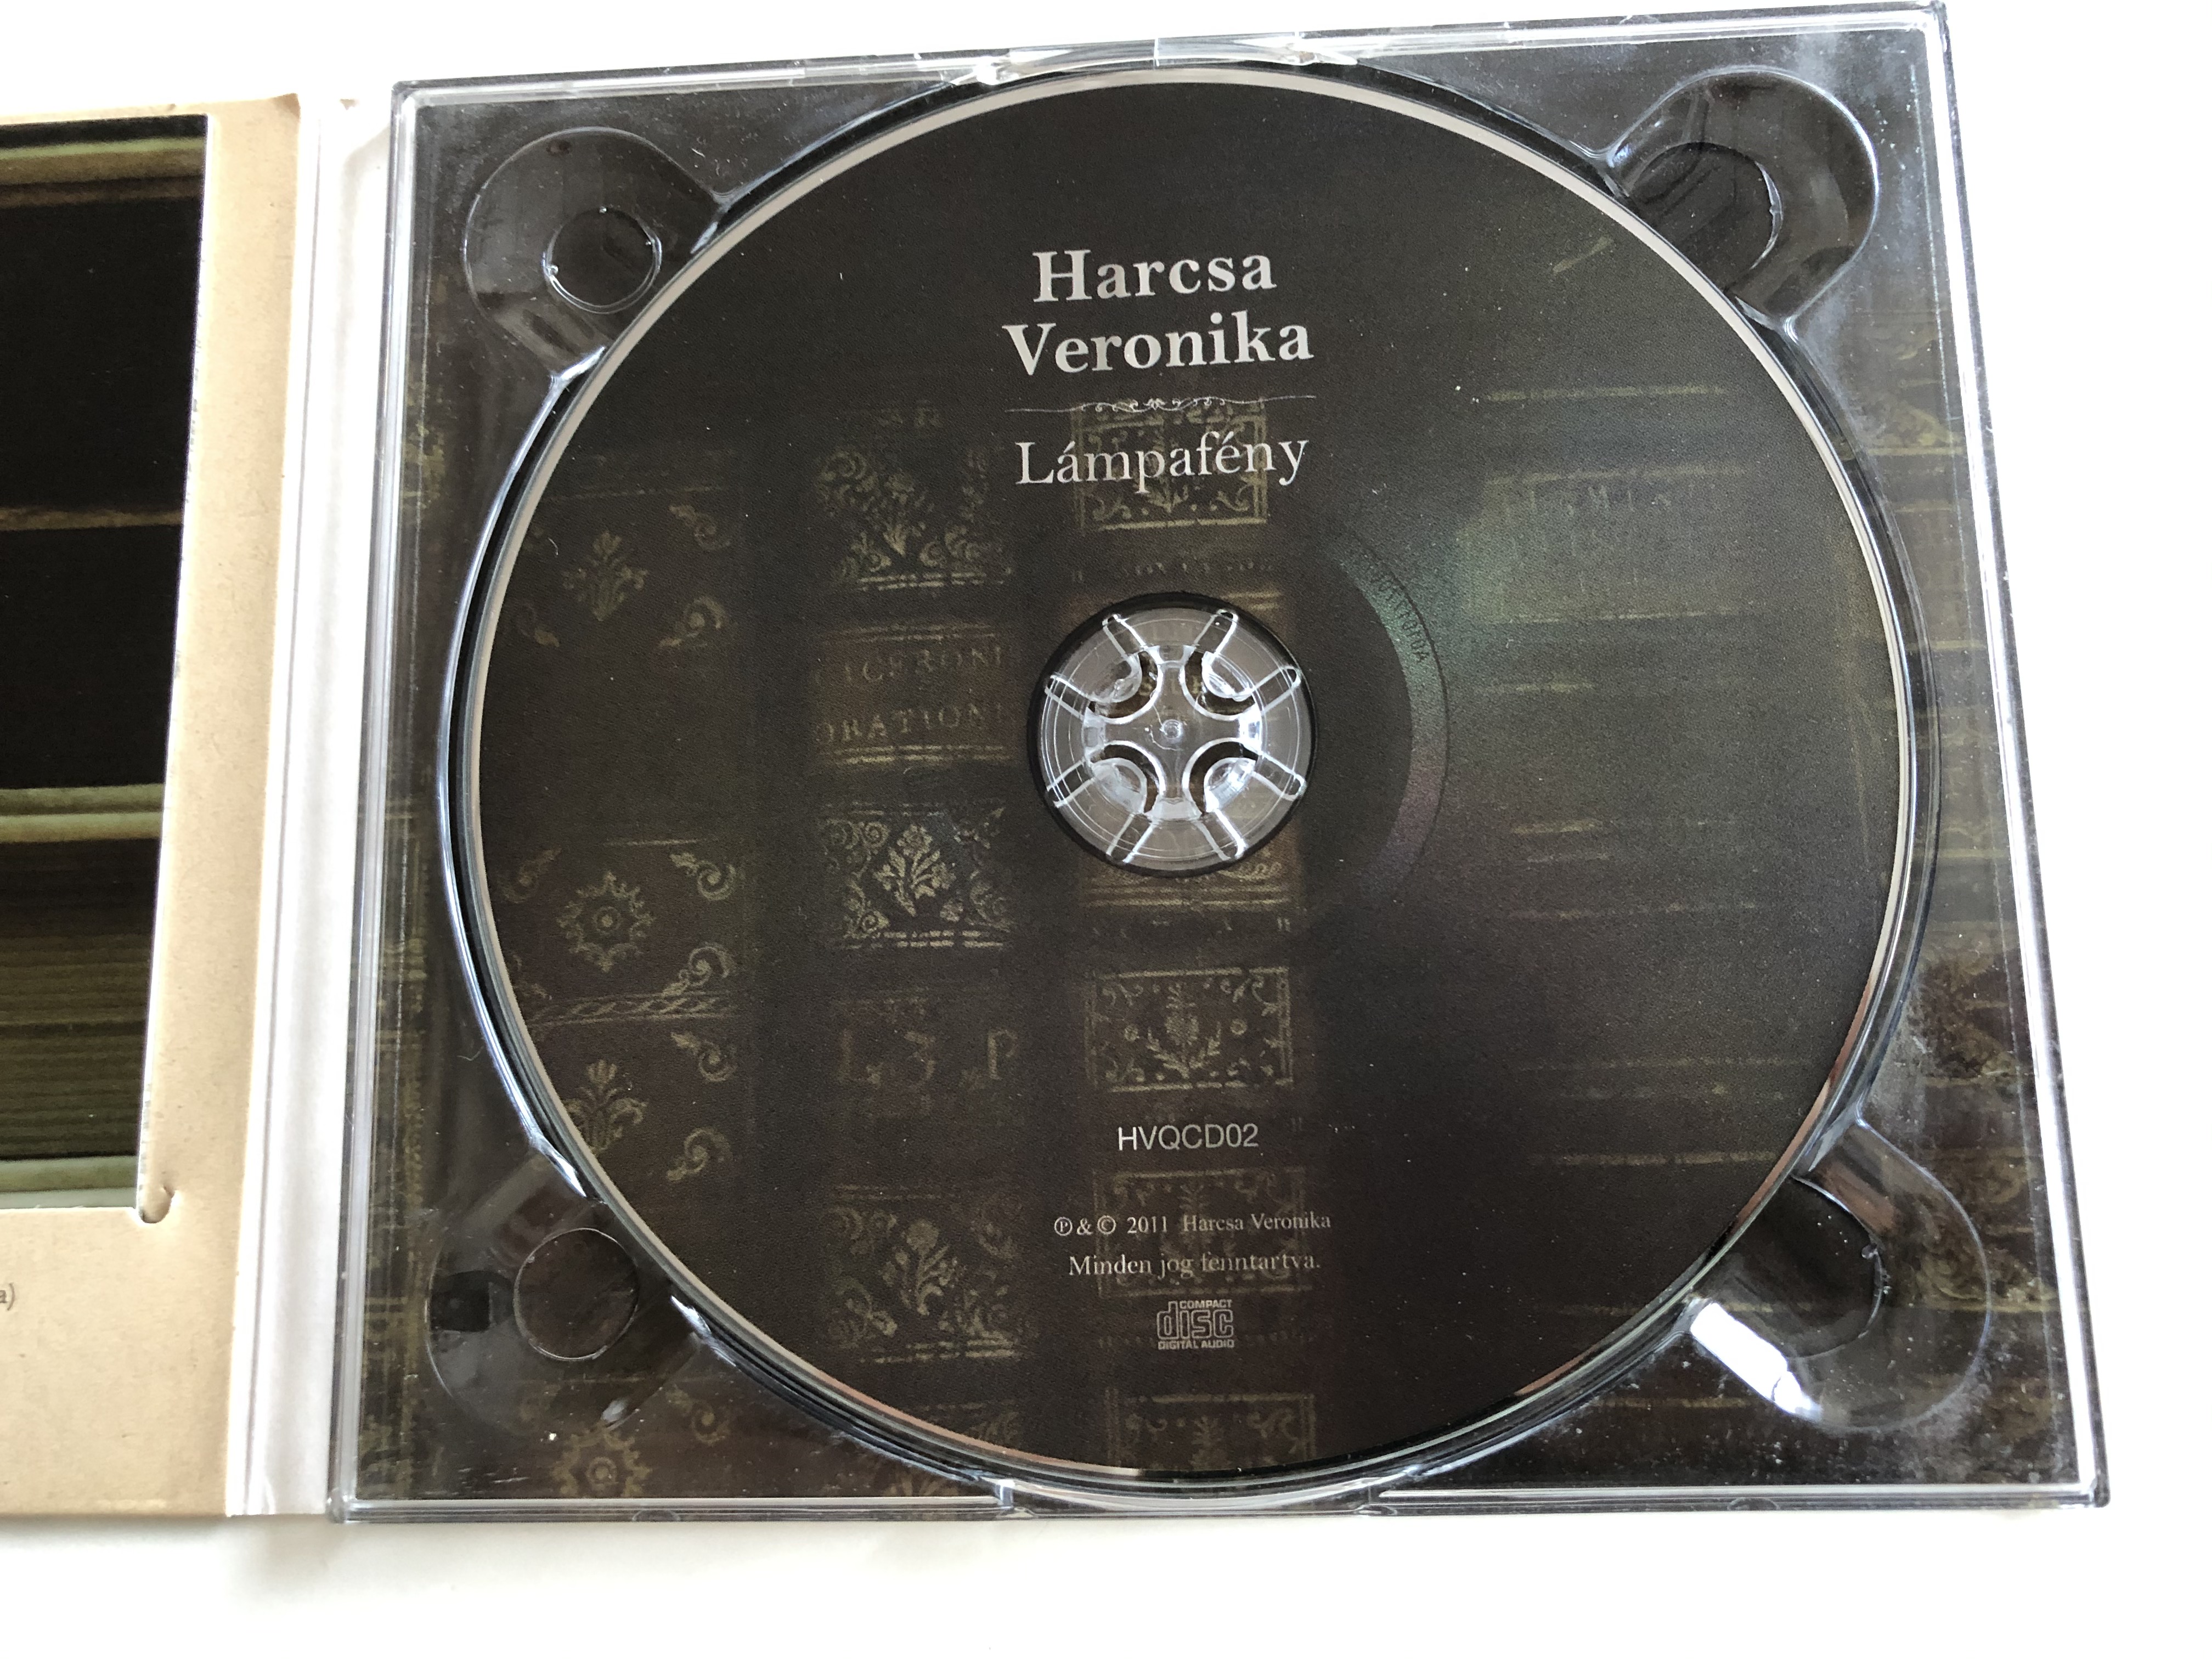 harcsa-veronika-l-mpaf-ny-harcsa-veronika-audio-cd-2011-hvqcd02-3-.jpg